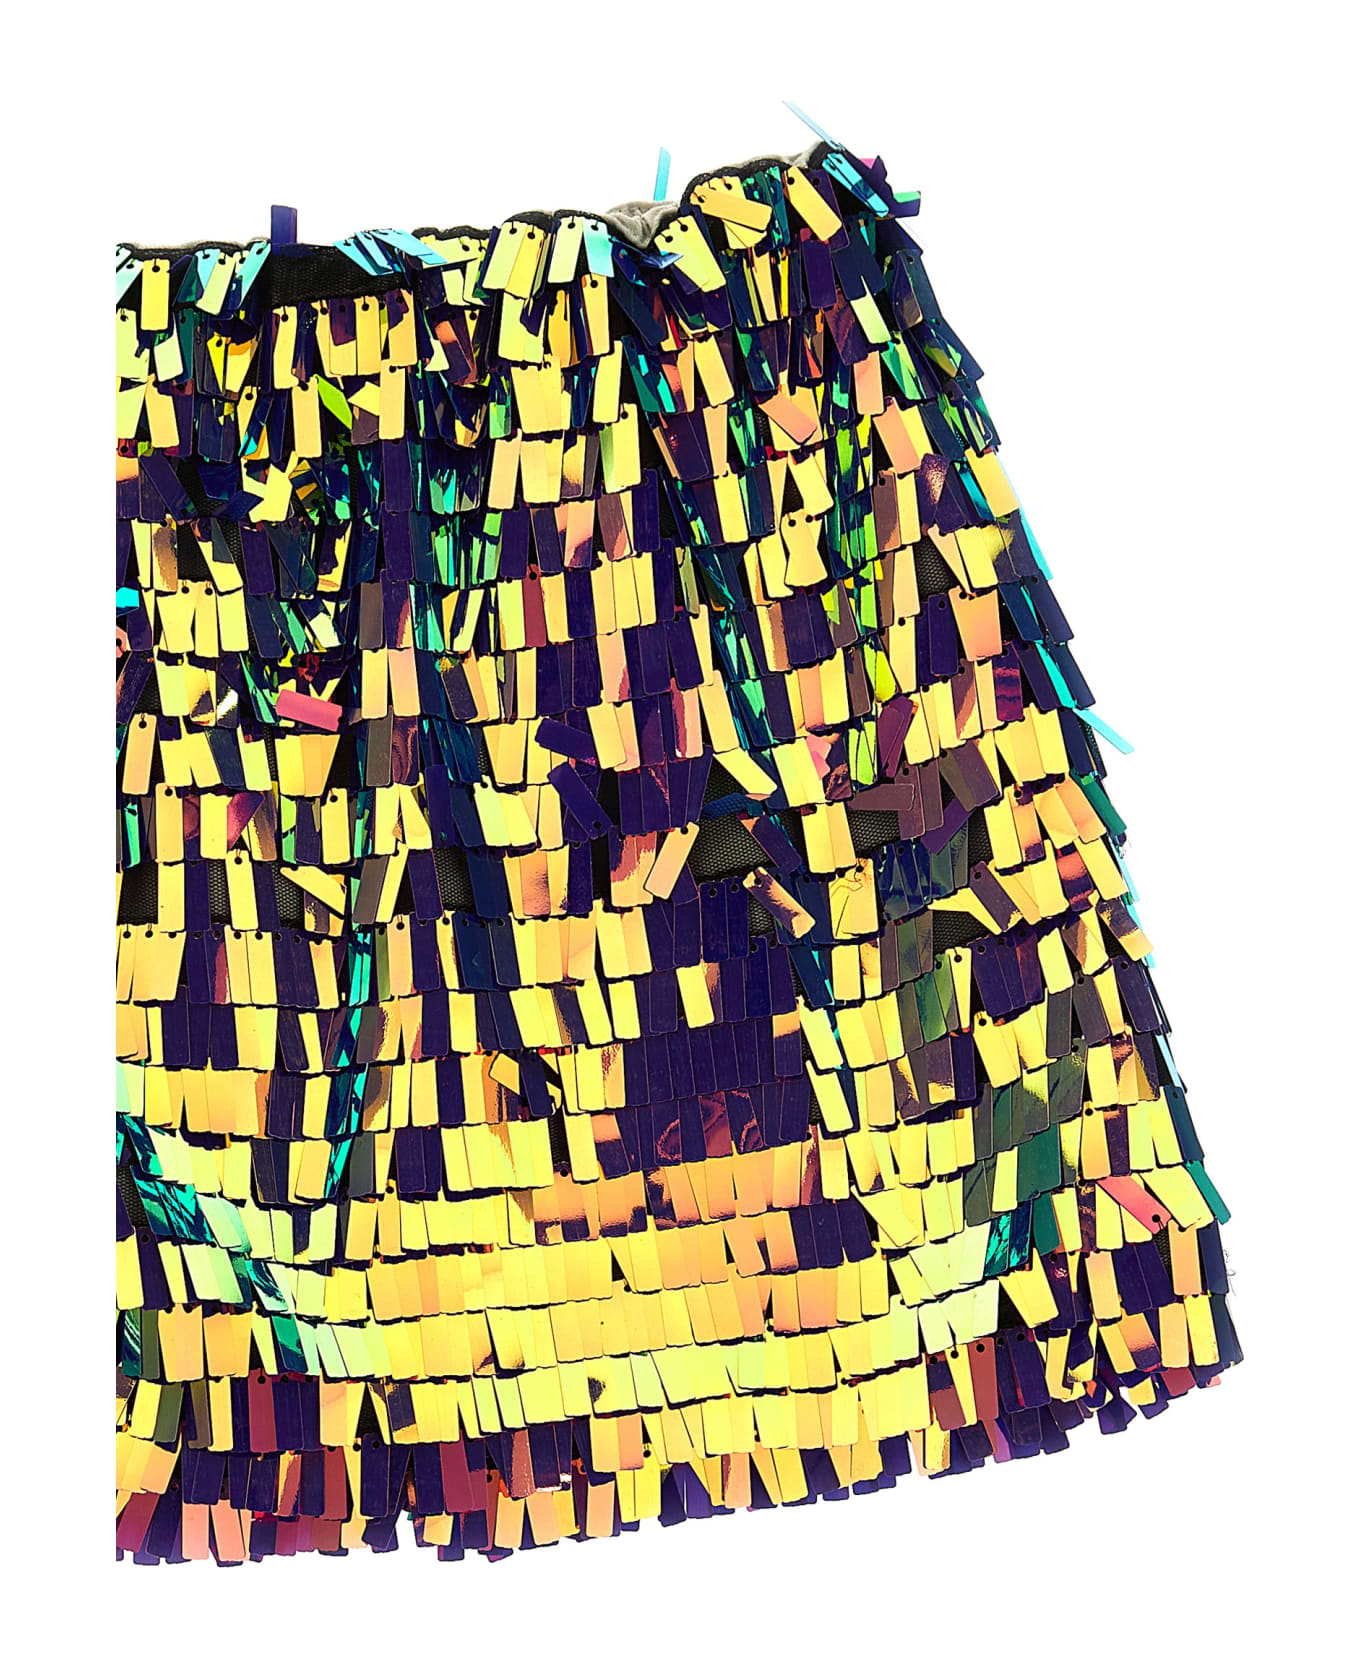 Douuod Sequin Miniskirt - Multicolor ボトムス